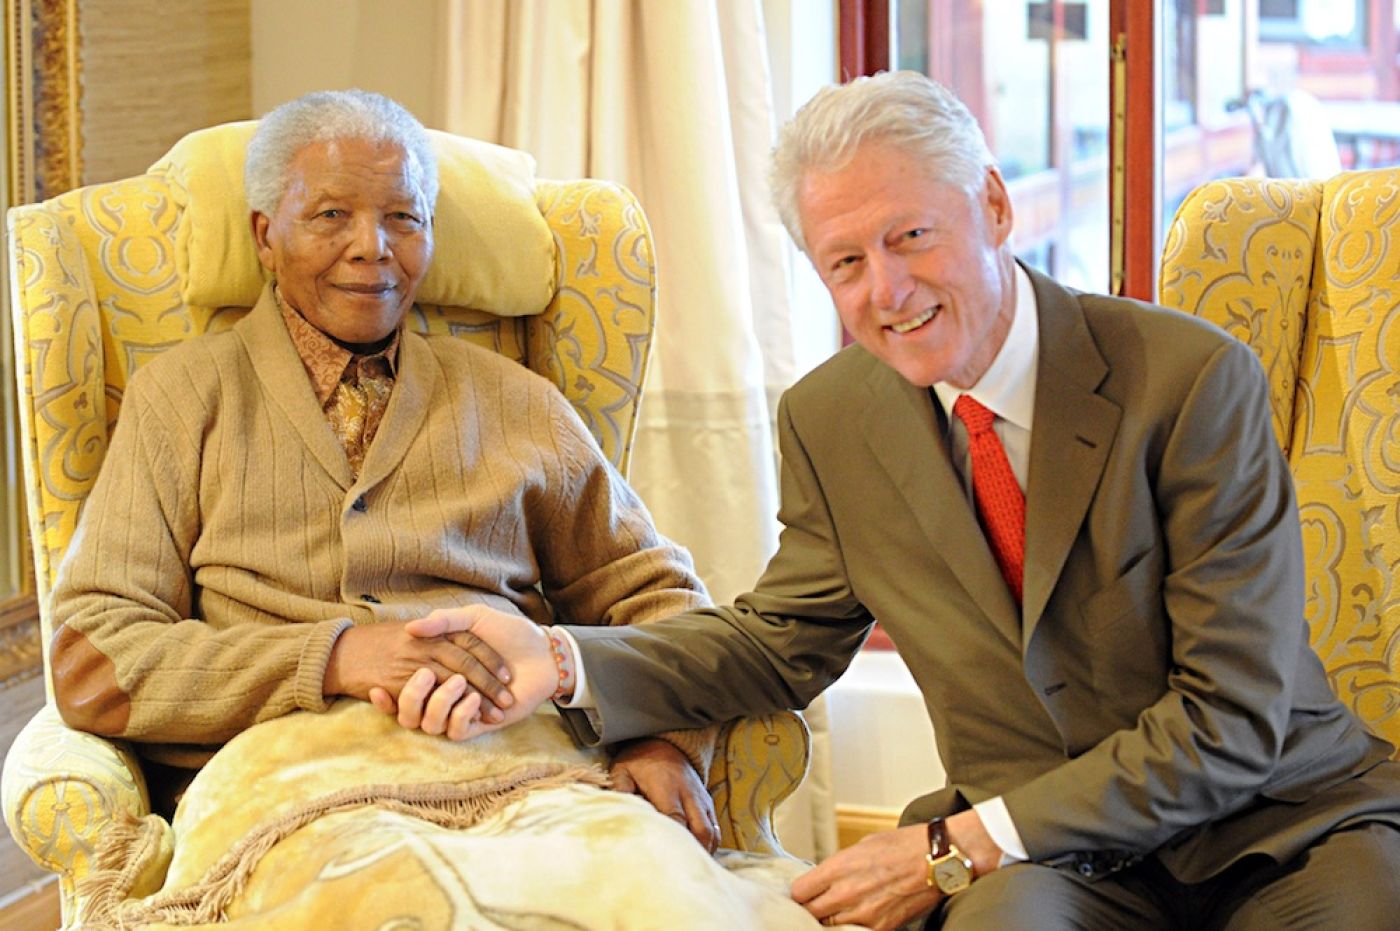 Former US President Bill Clinton pays a visit to former President Nelson Mandela – Nelson Mandela Foundation